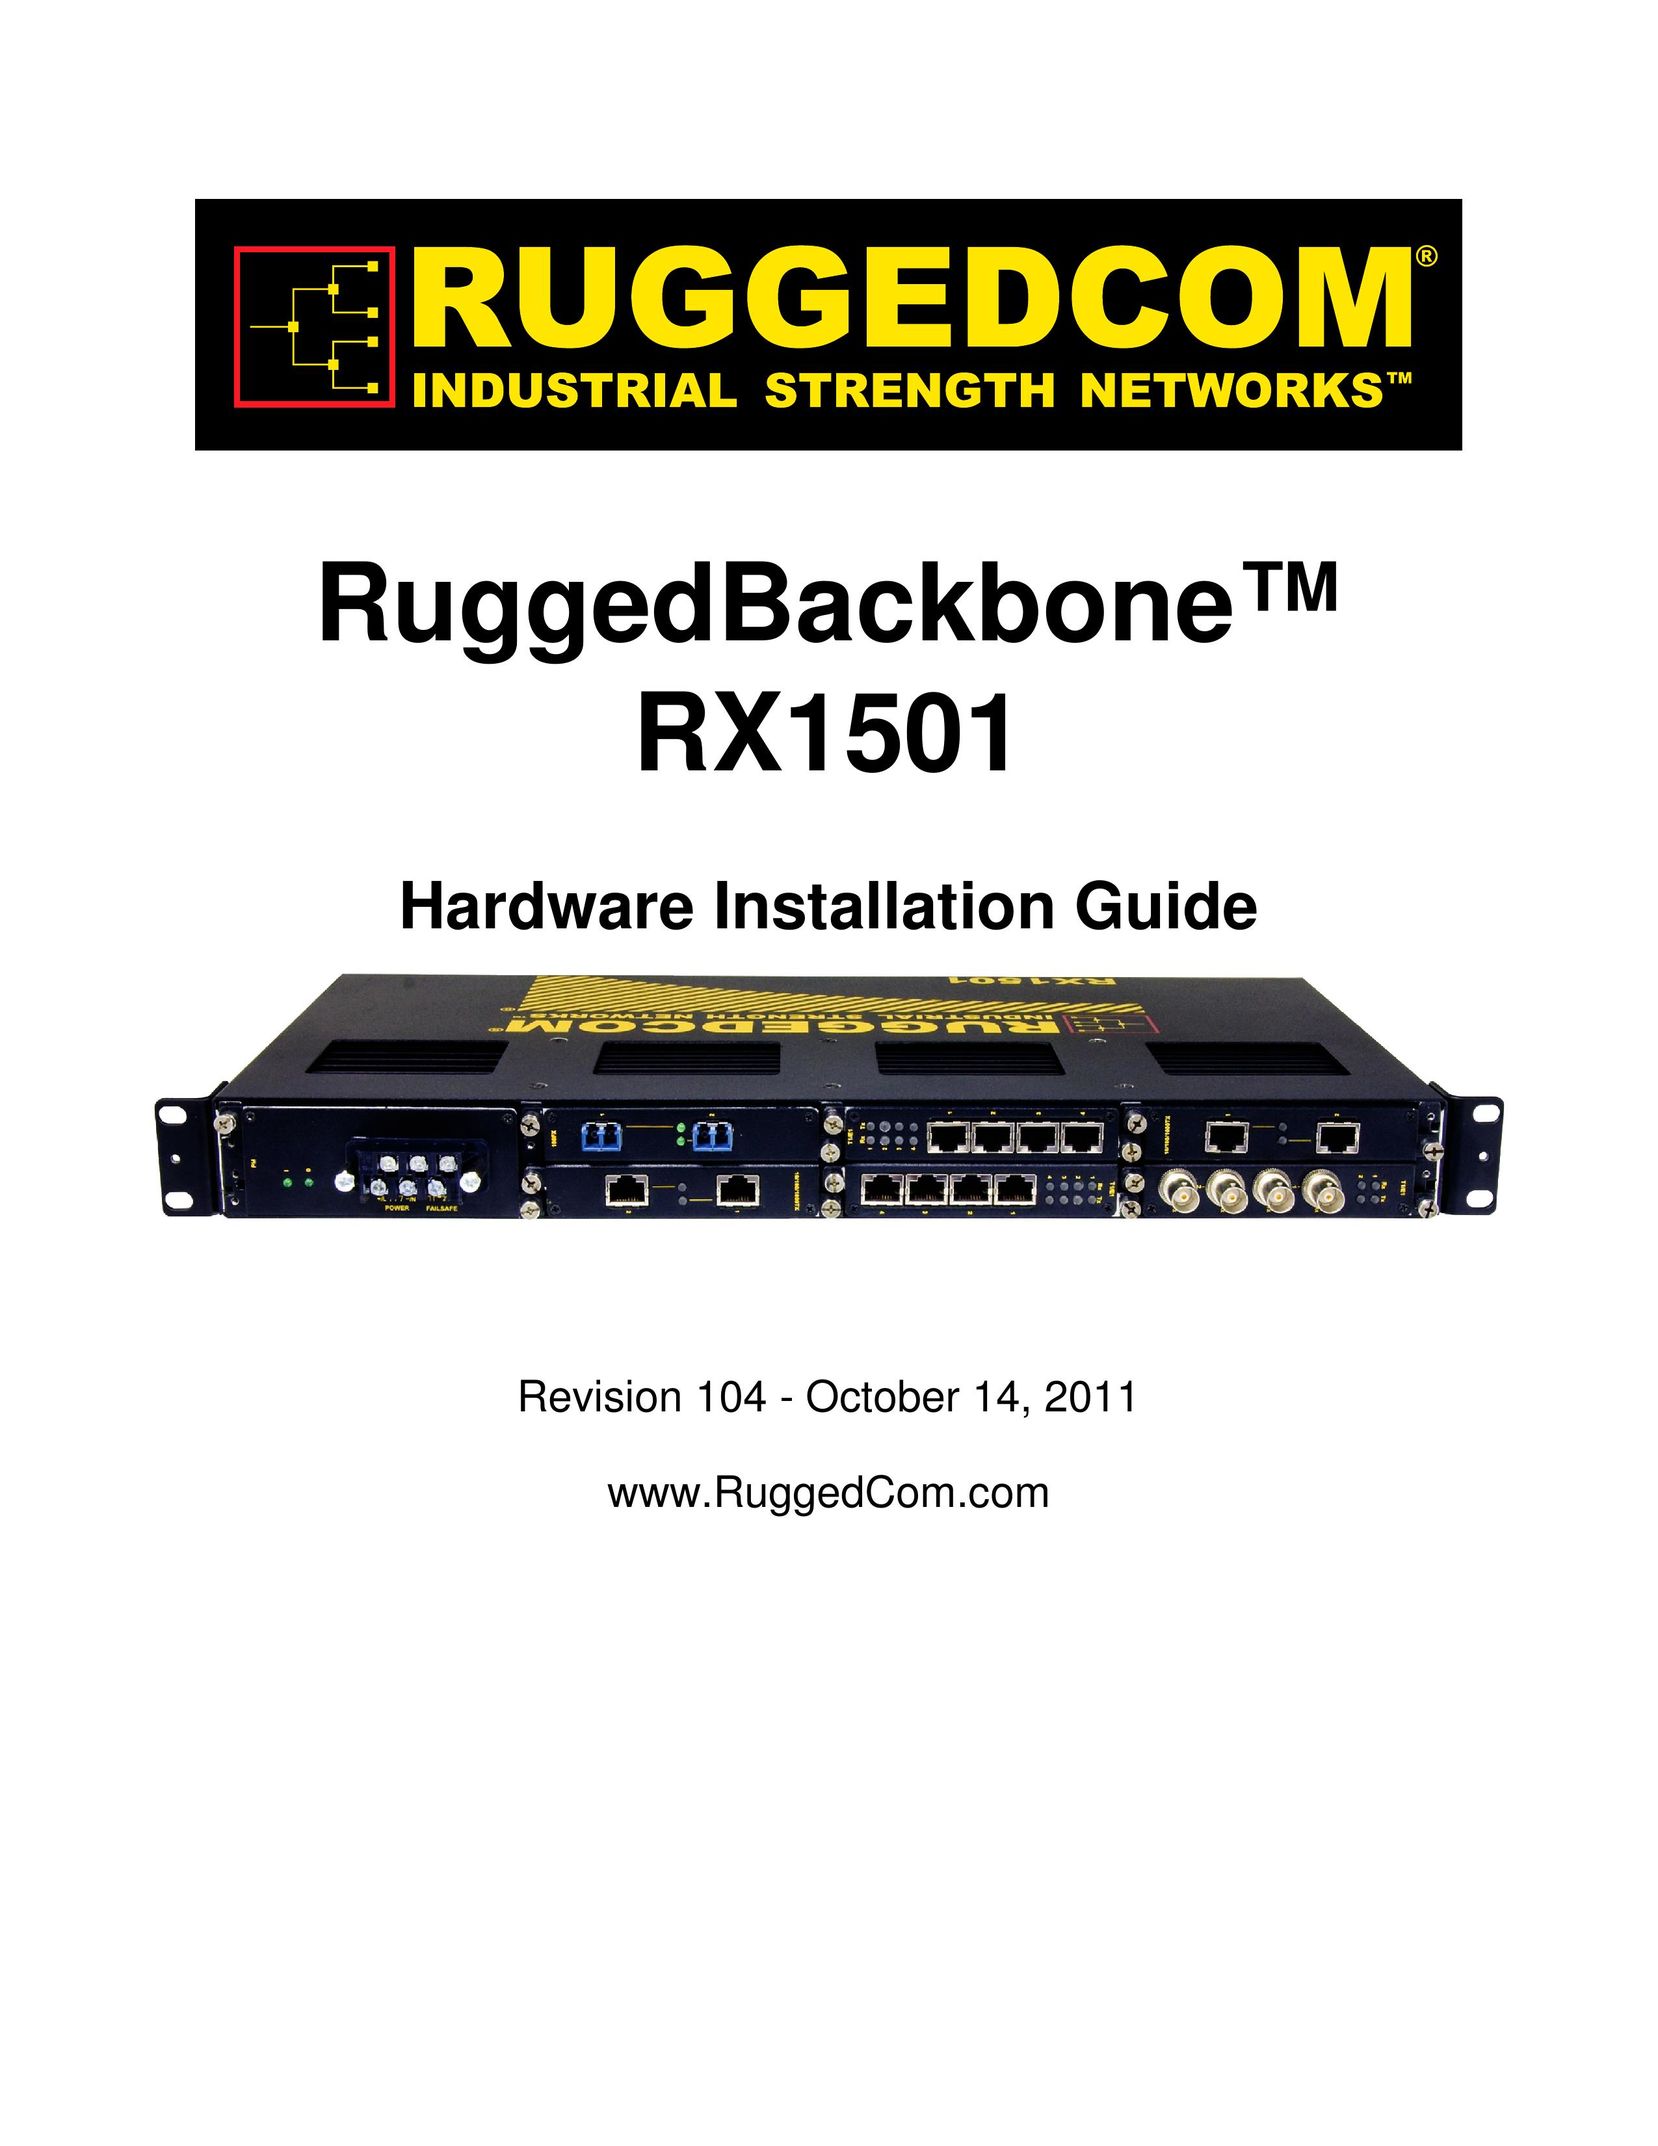 RuggedCom RX1501 Computer Hardware User Manual